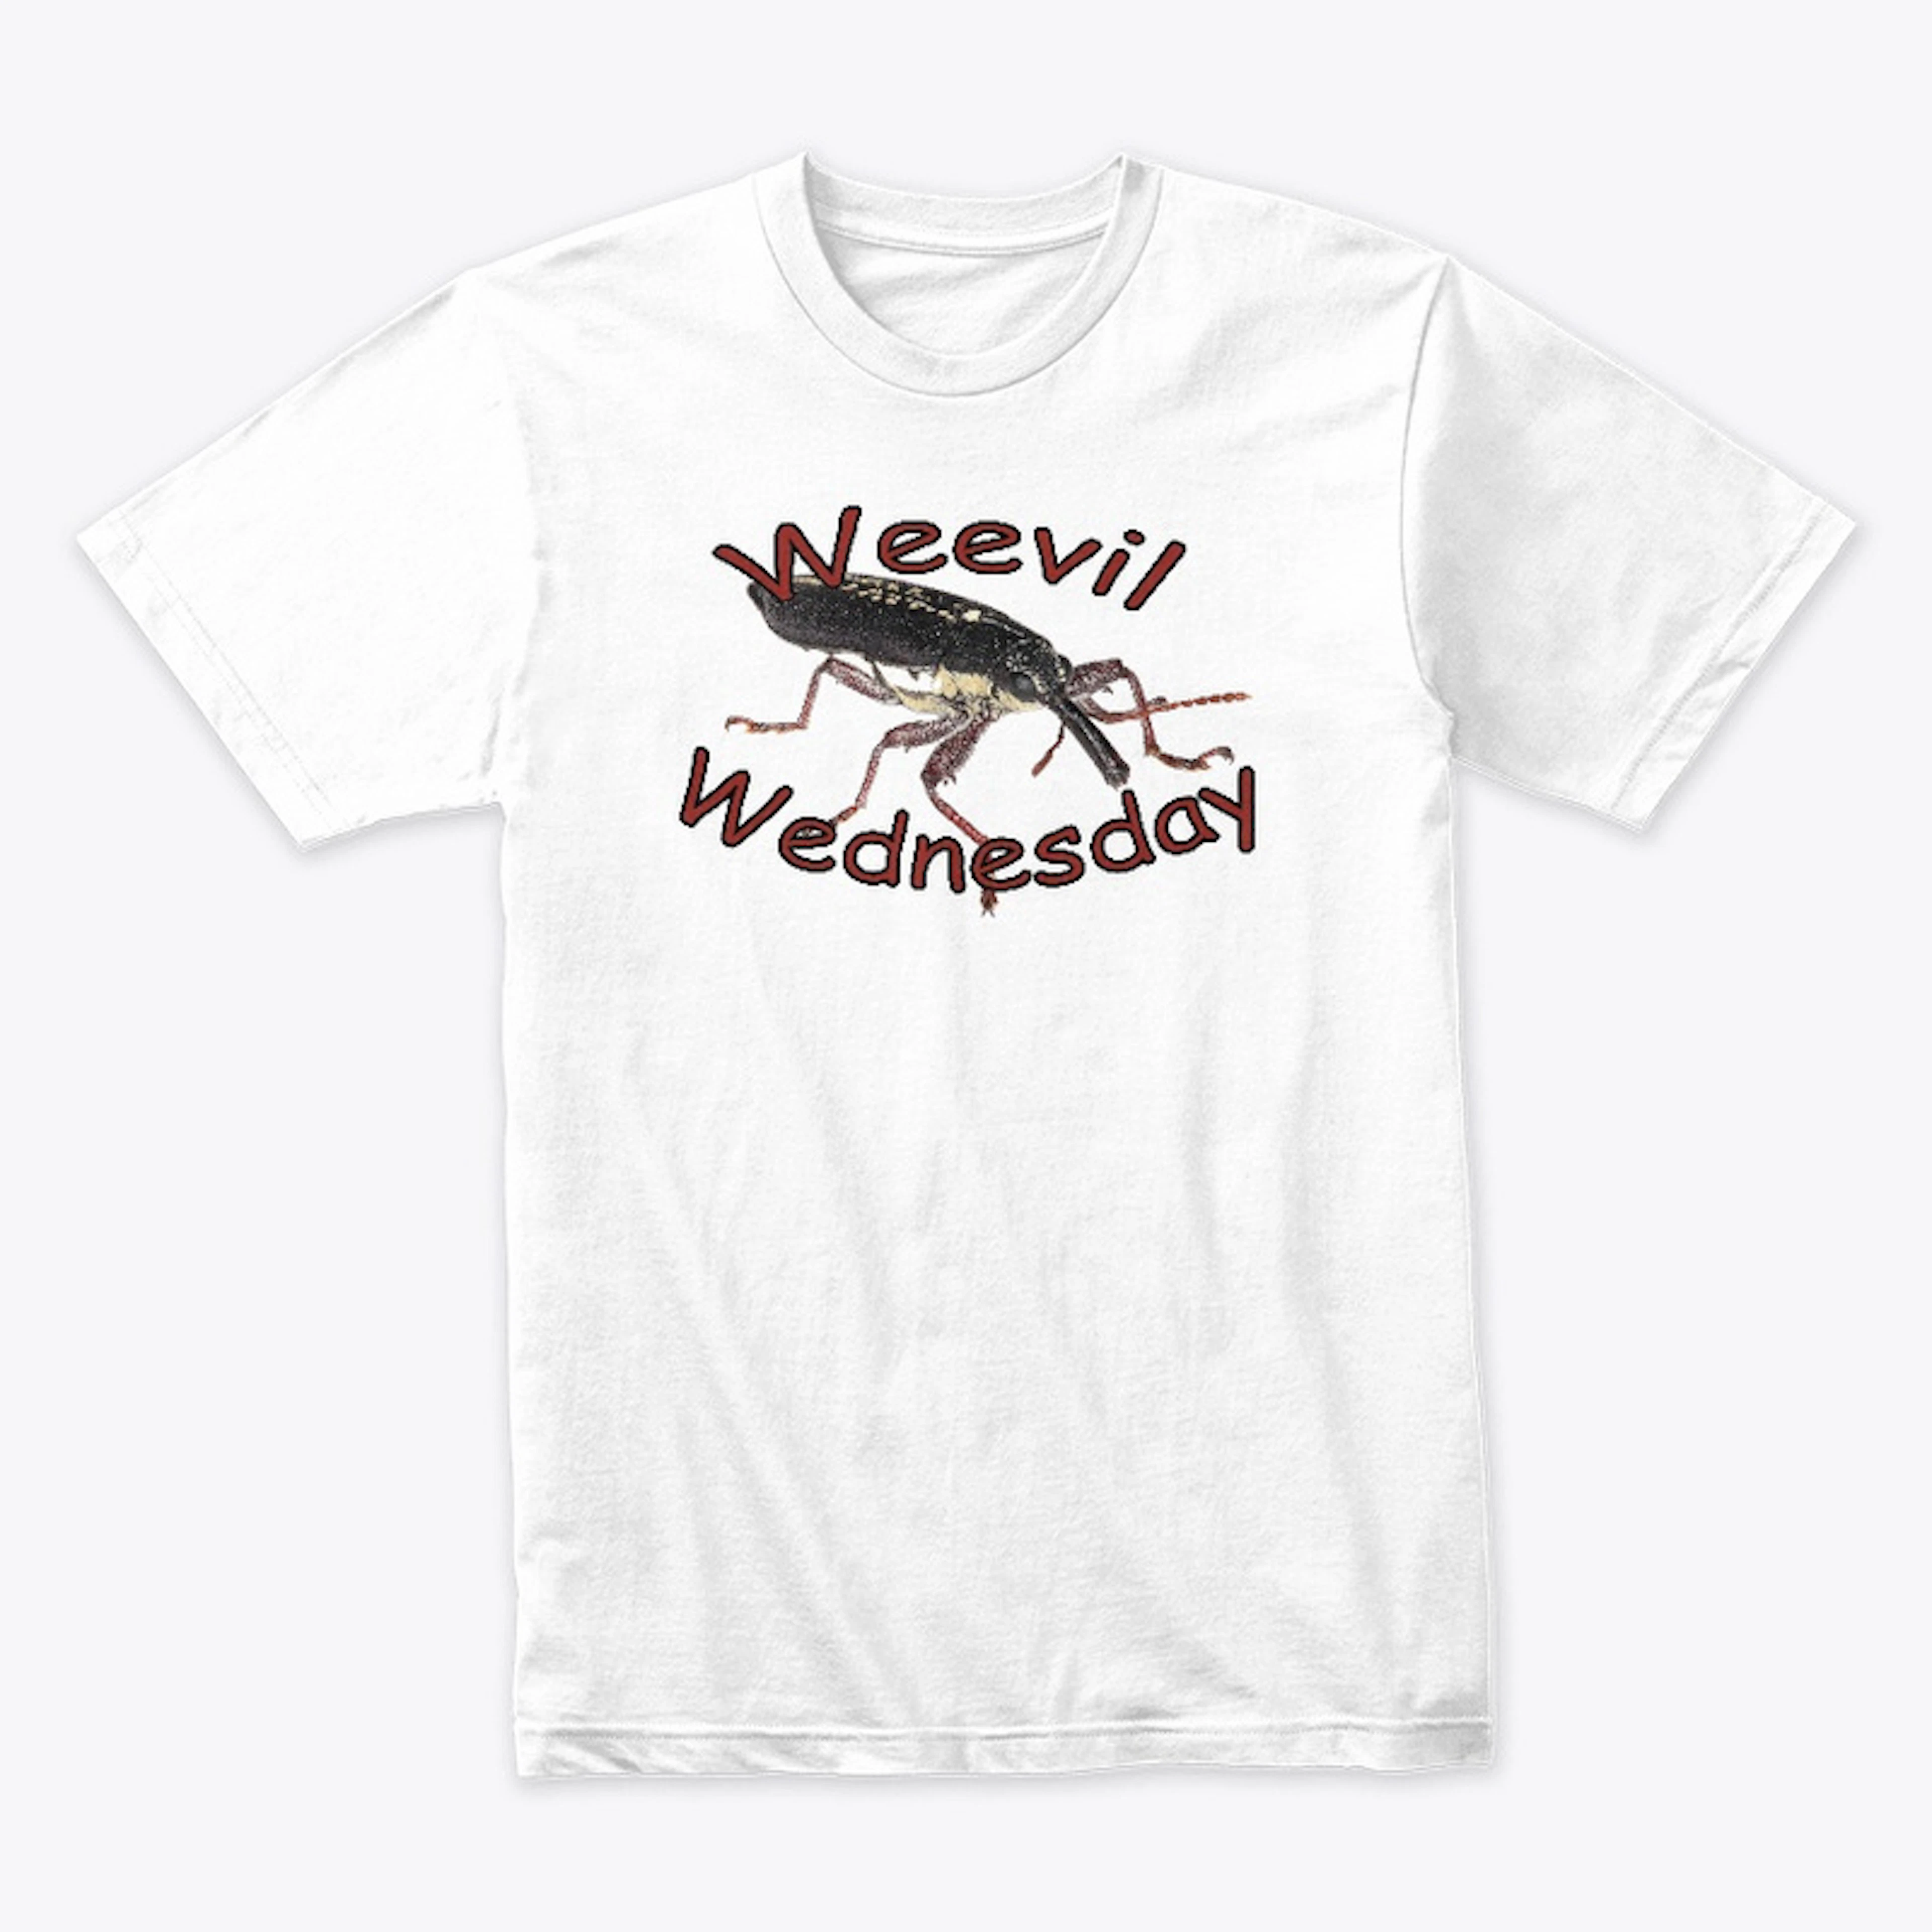 Weevil Wednesday